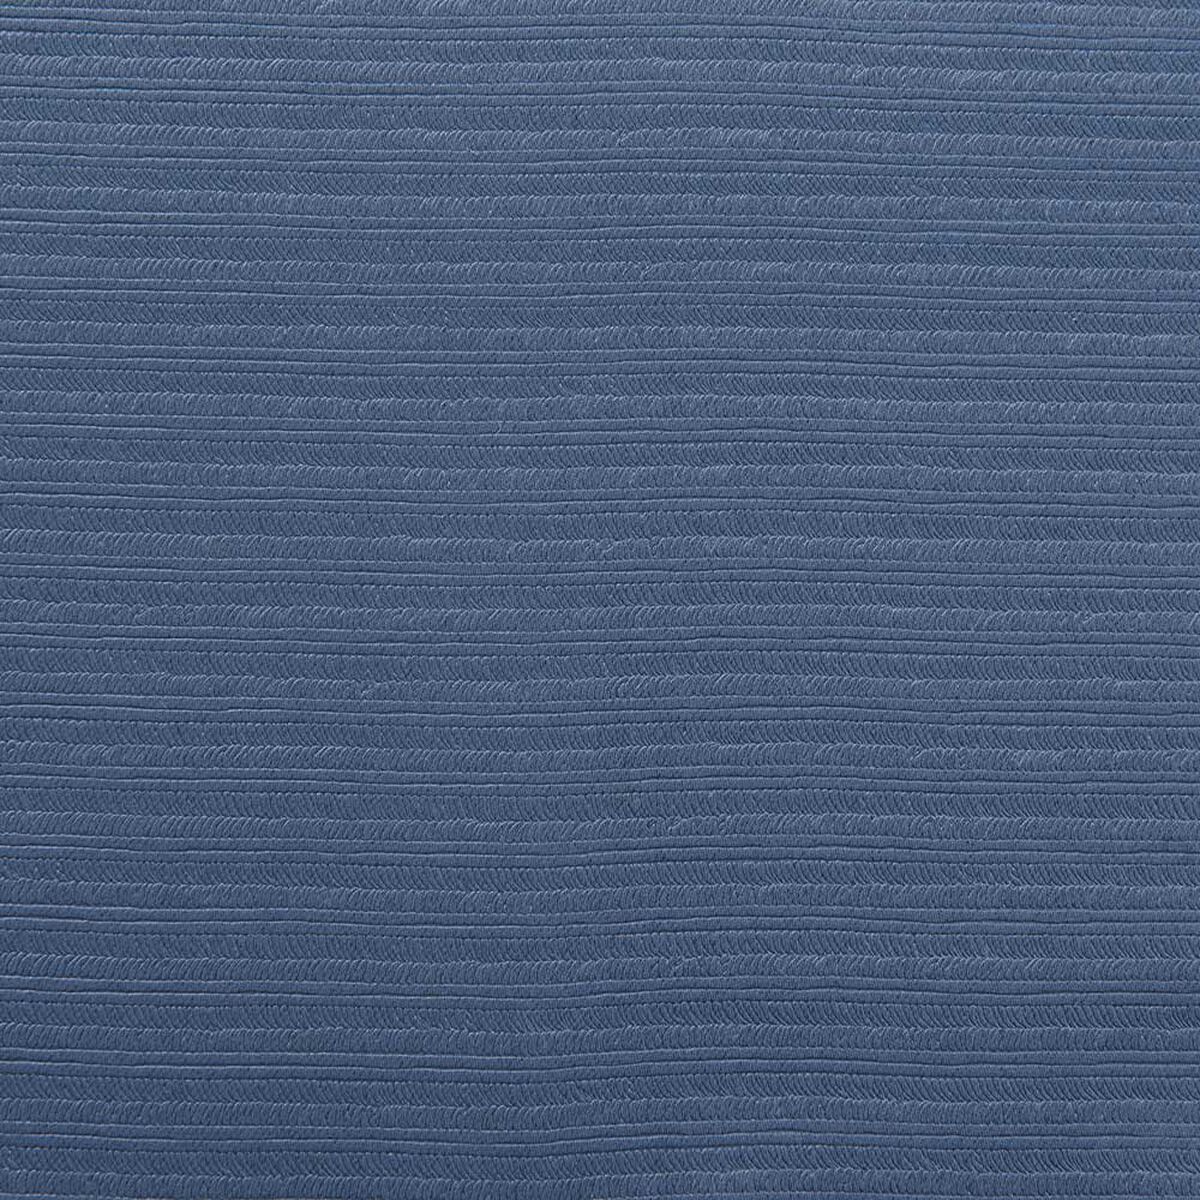 Set Cortina Blackout Mashini Frutillar 140 x 220 cm Azul 8 Piezas